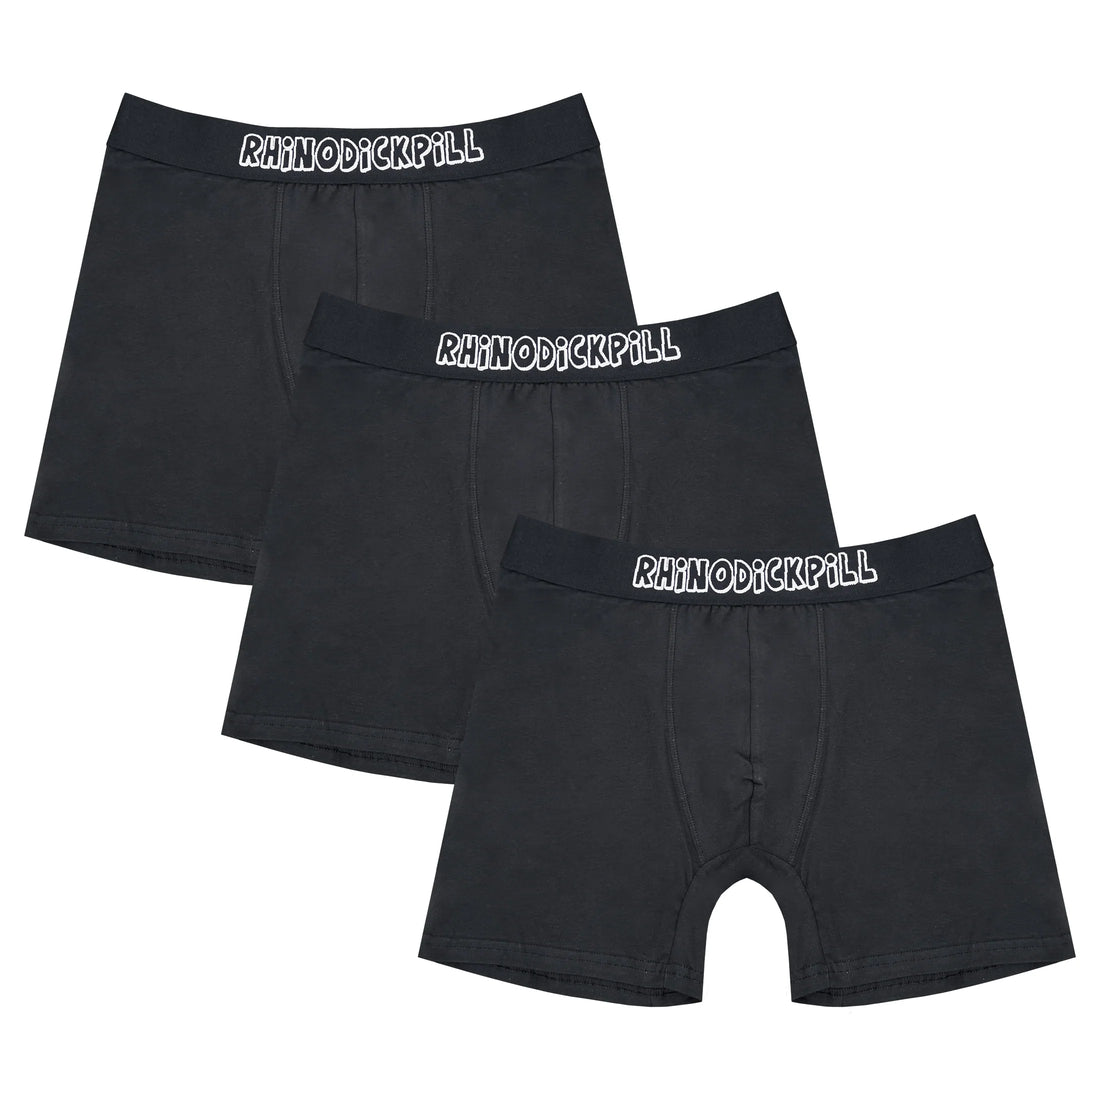 rhinodickpill Black Underwear 3-Pack